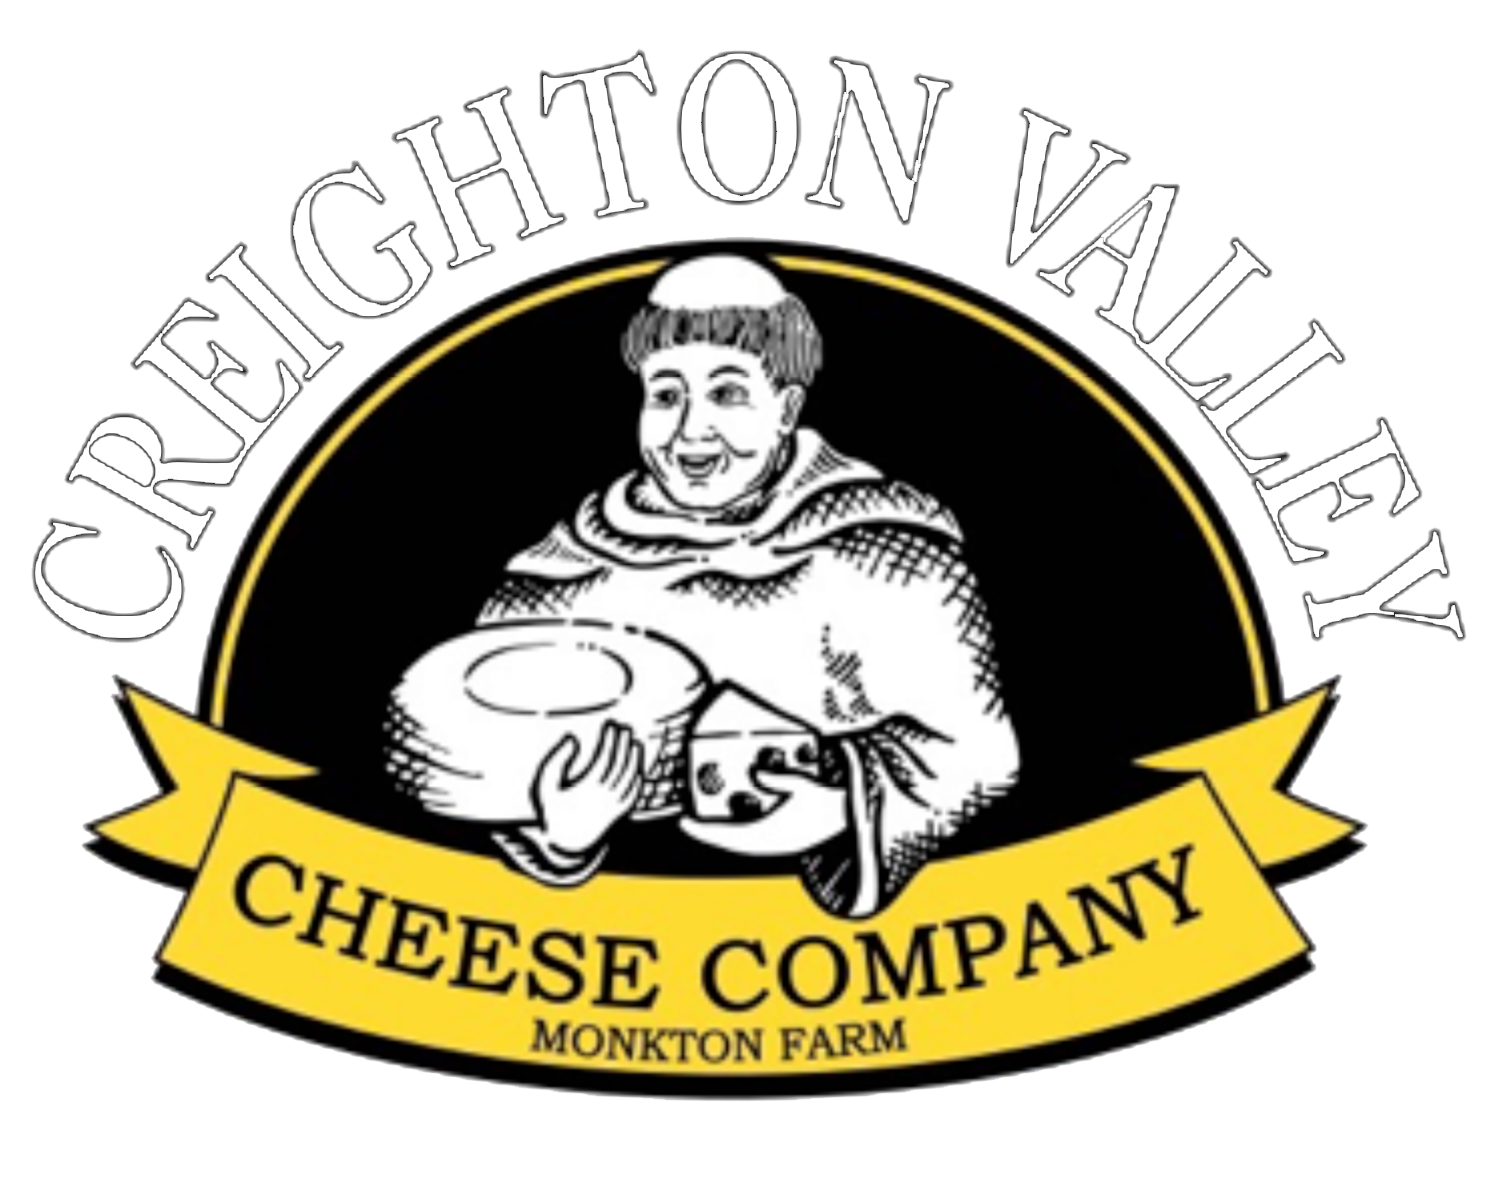 Creighton Valley Cheese